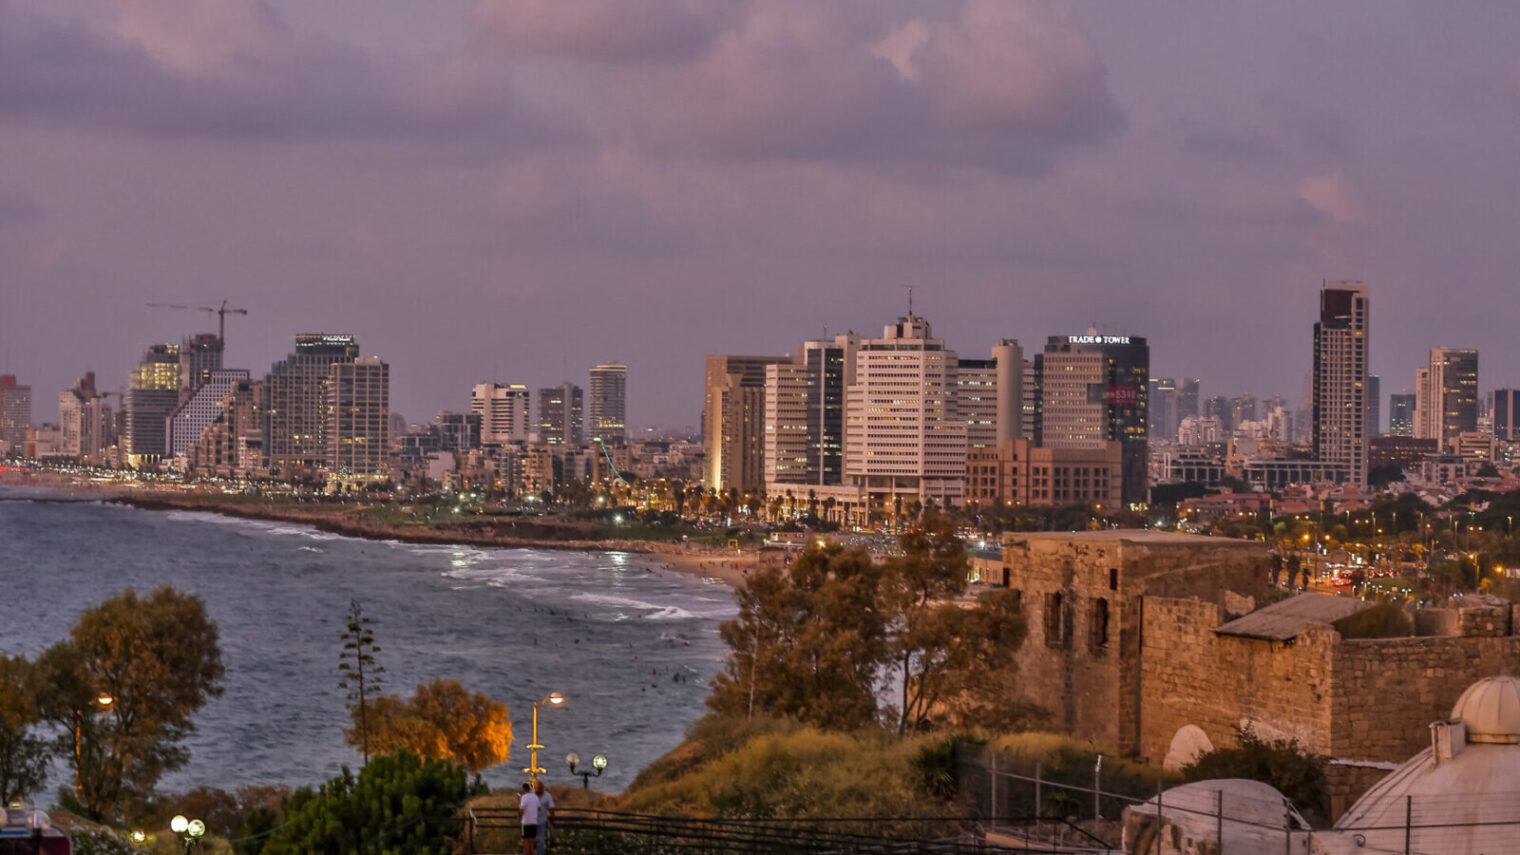 The view of Tel Aviv from Jaffa. Photo by Guy Yechiely, courtesy of Tel Aviv Municipality